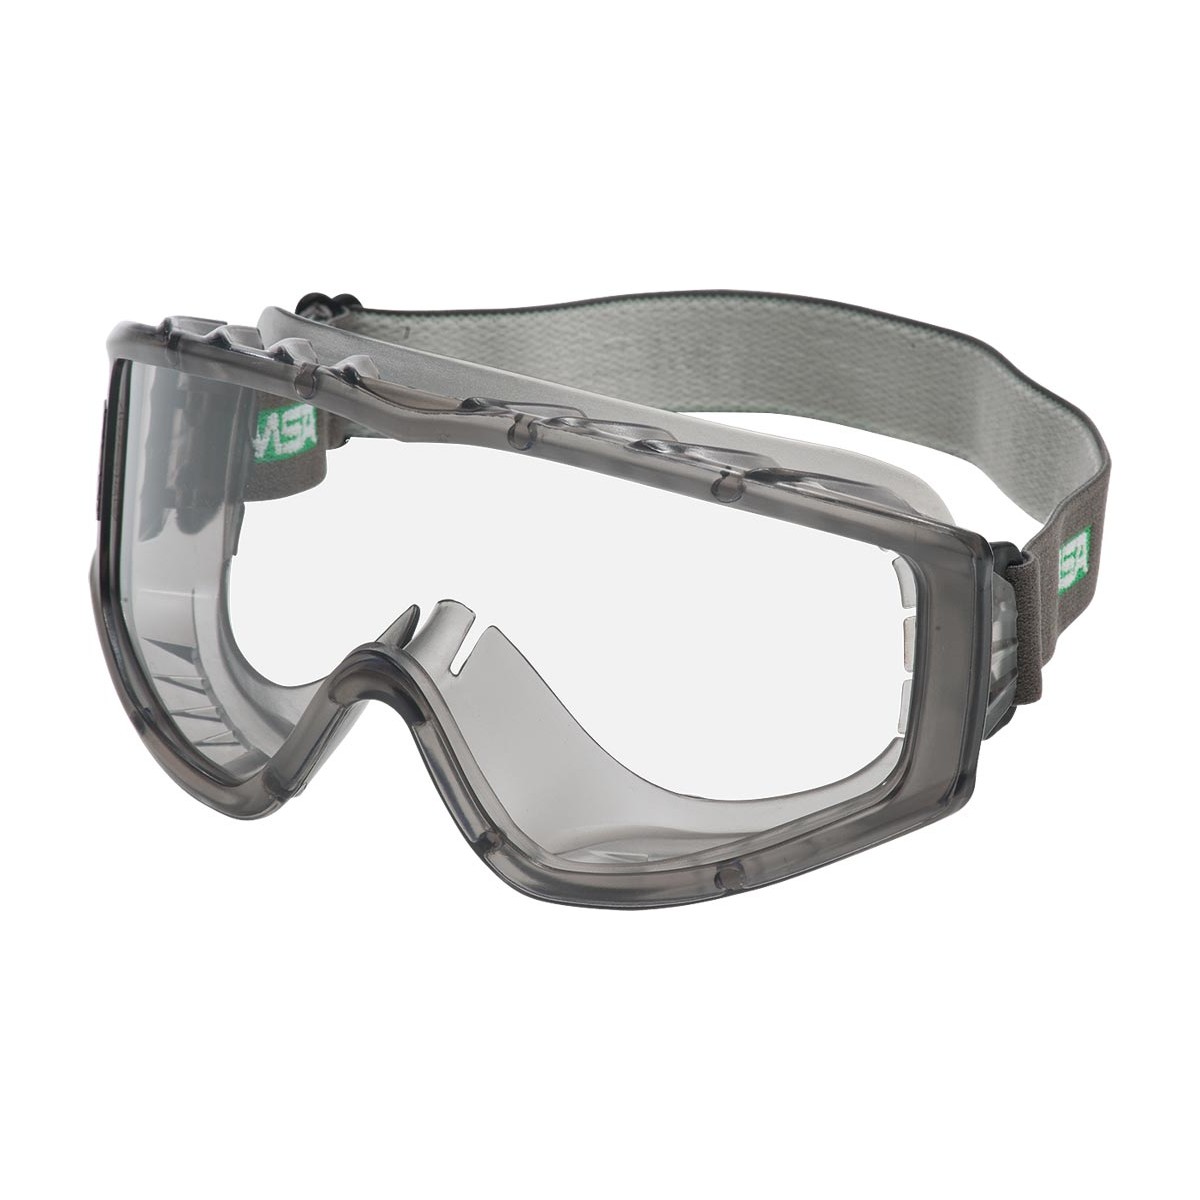 Очки защитные артикул. MSA очки защитные. Очки защитные сетчатые MSA. Защитные очки Milwaukee Premium. Защитные очки Cofra gl-01.